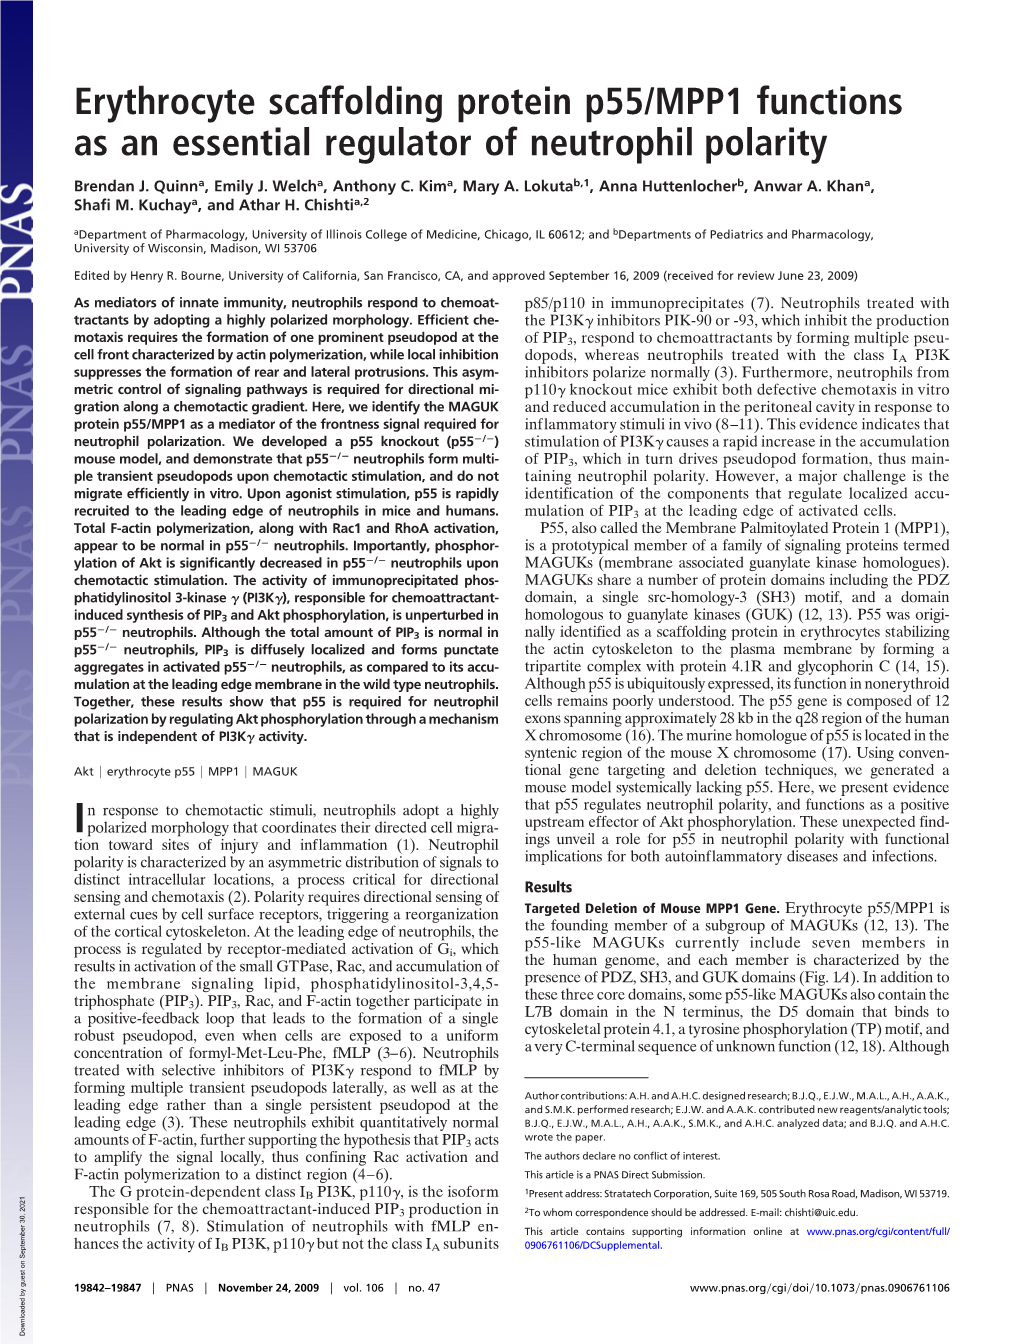 Erythrocyte Scaffolding Protein P55/MPP1 Functions As an Essential Regulator of Neutrophil Polarity